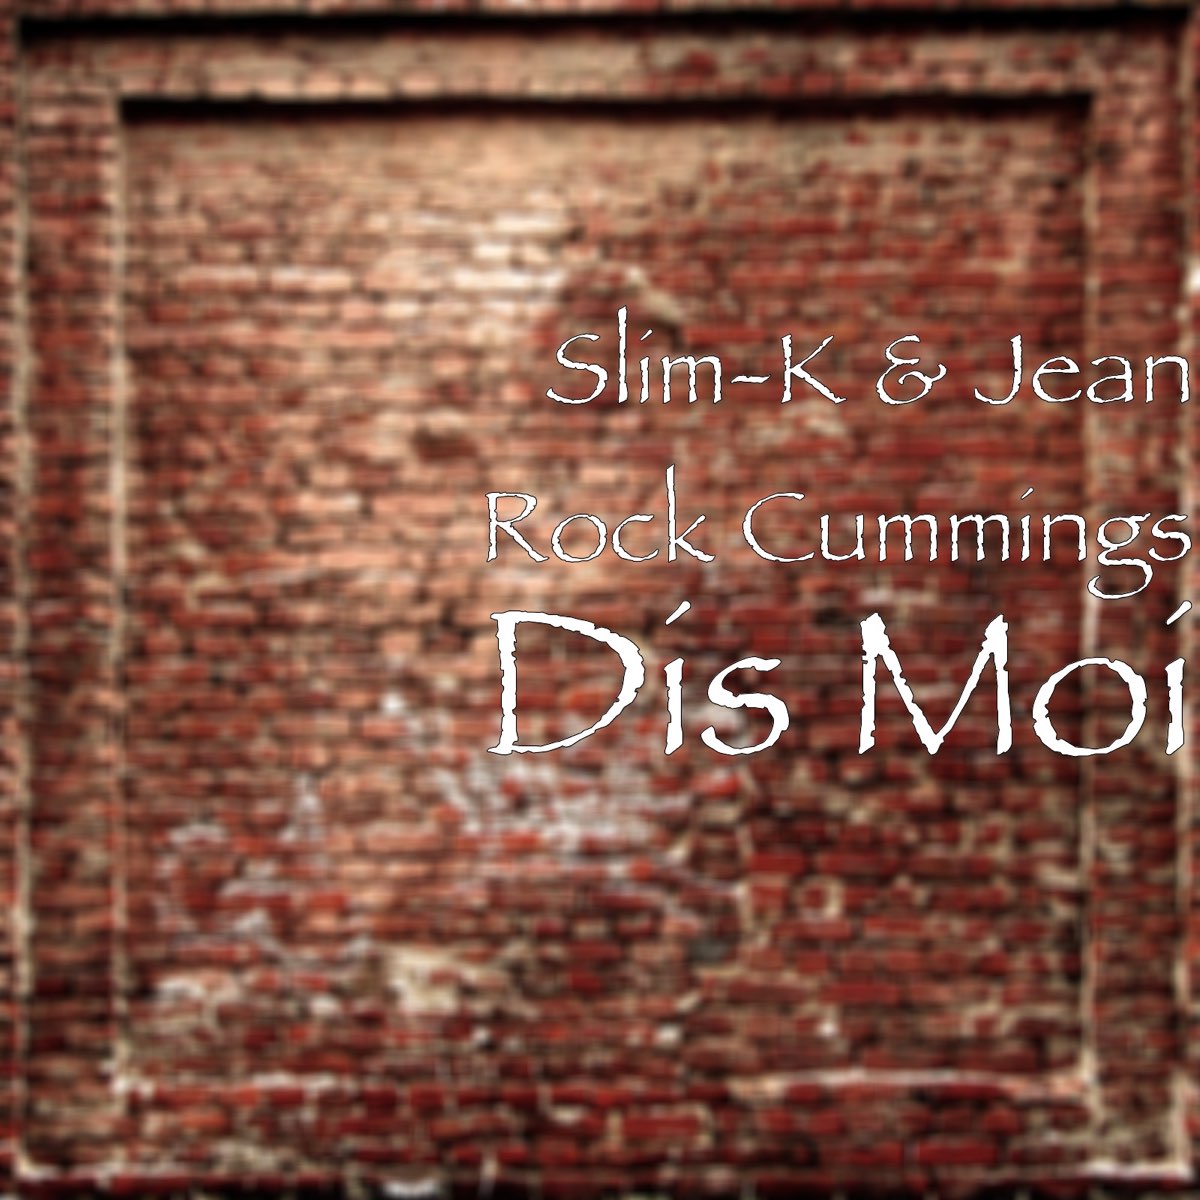 Dis moi - Single by Slim-K & Jean Rock Cummings on Apple Music